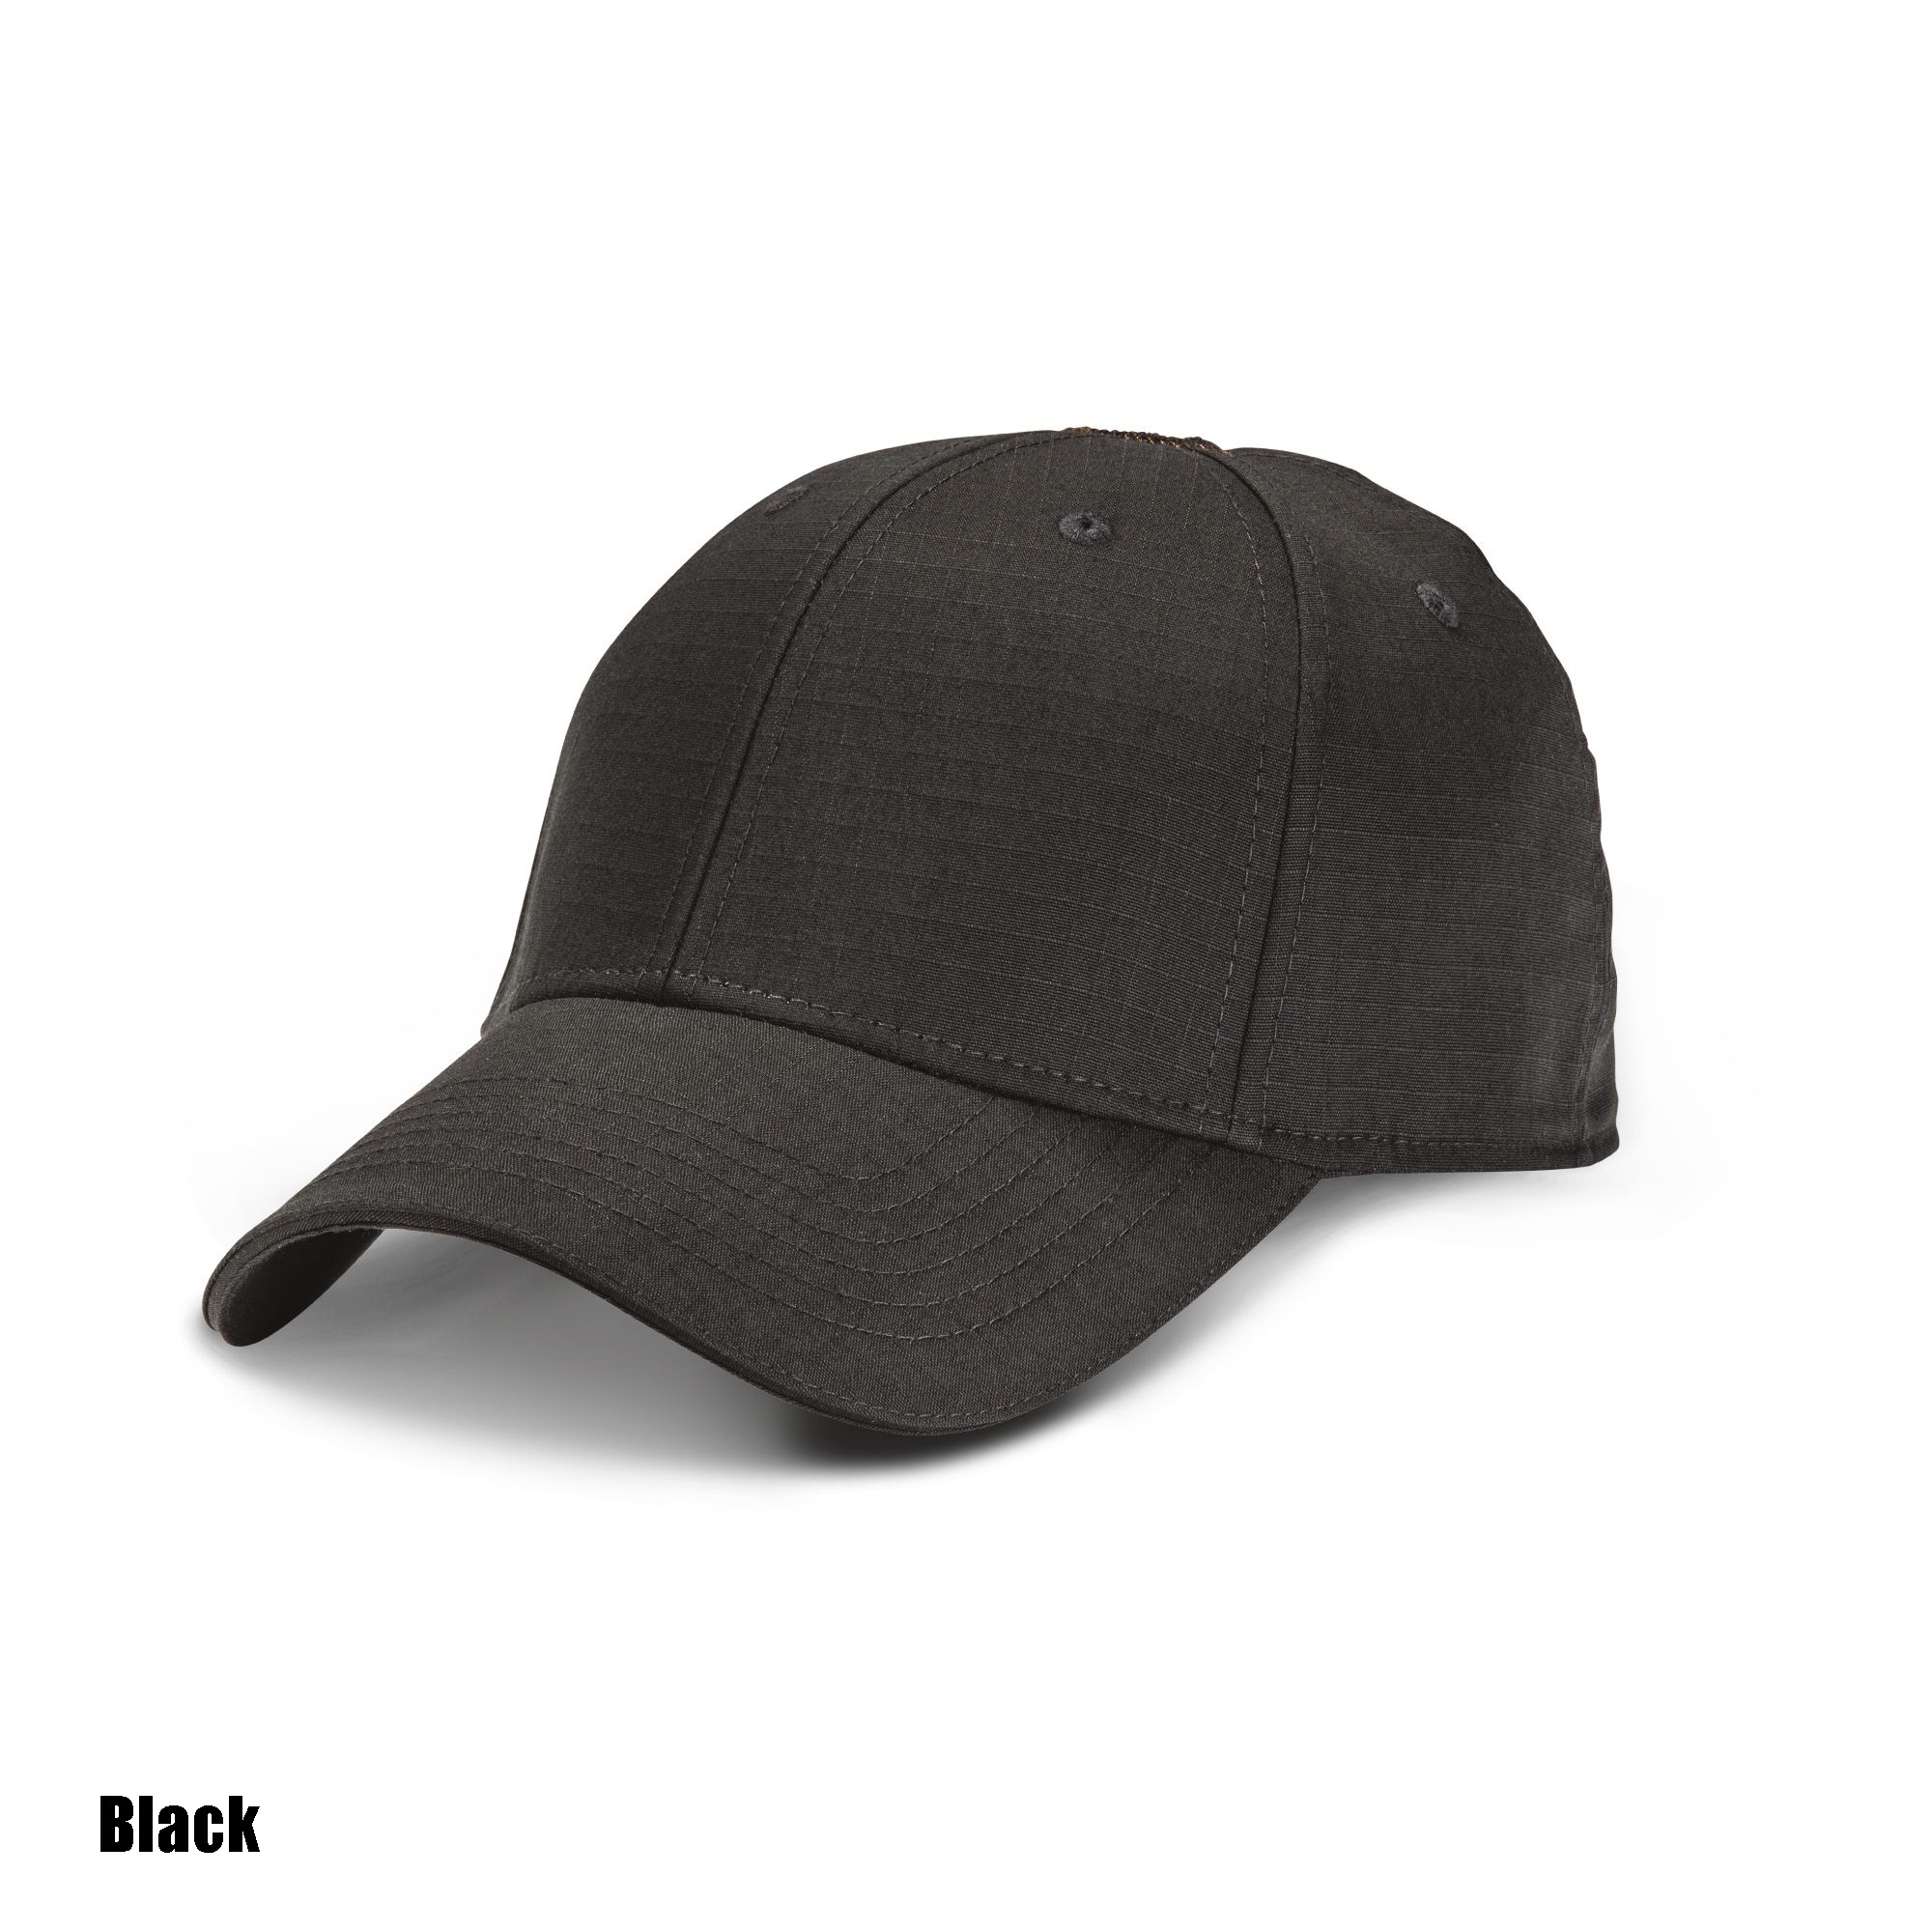 5.11 Flex Uniform Hat